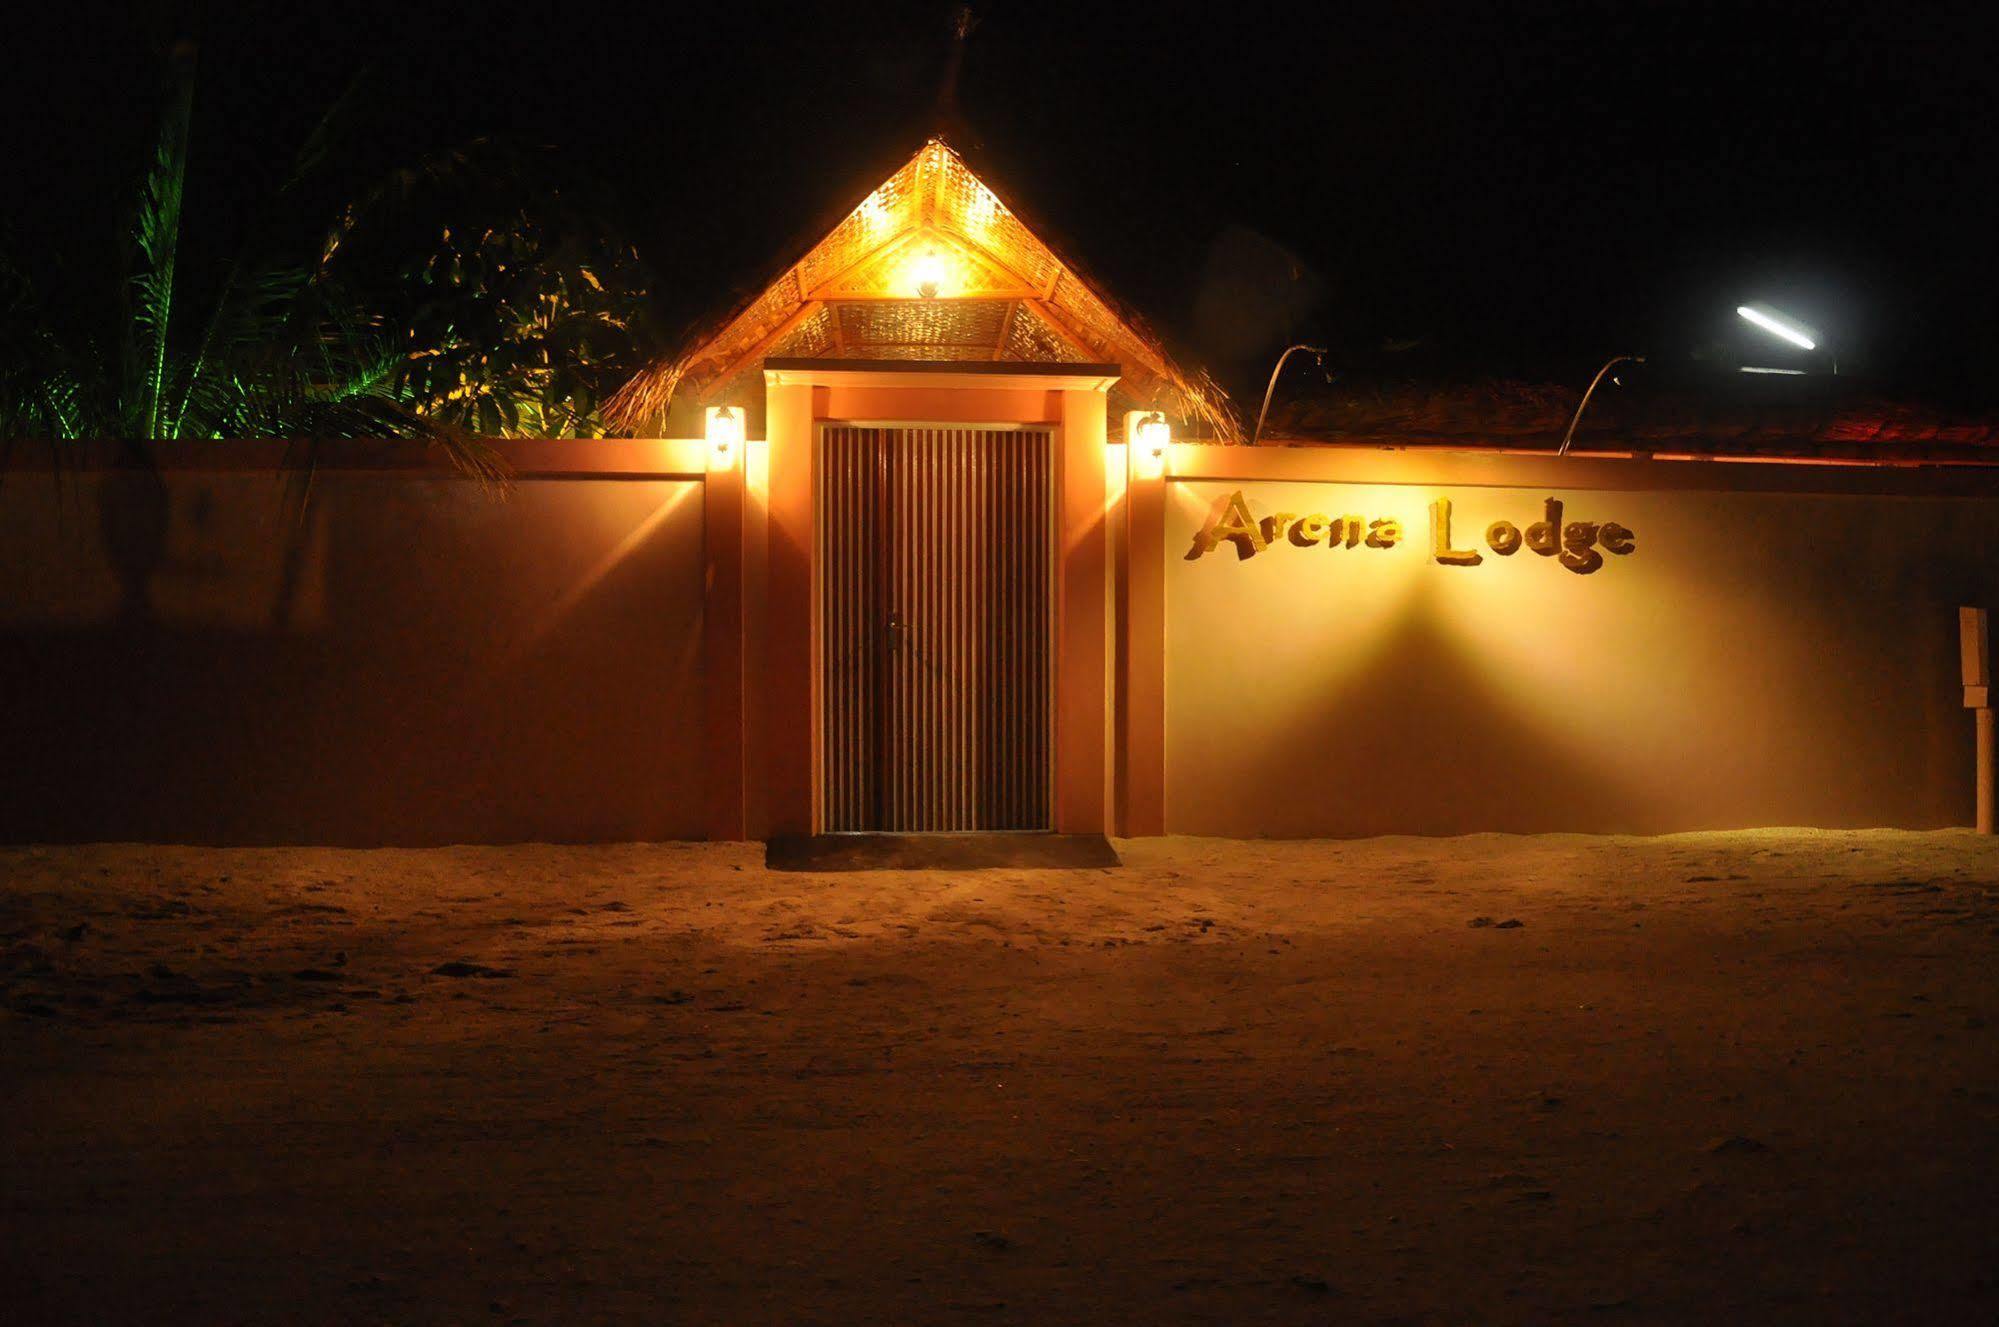 Arena Lodge Sky Maafushi Exterior foto